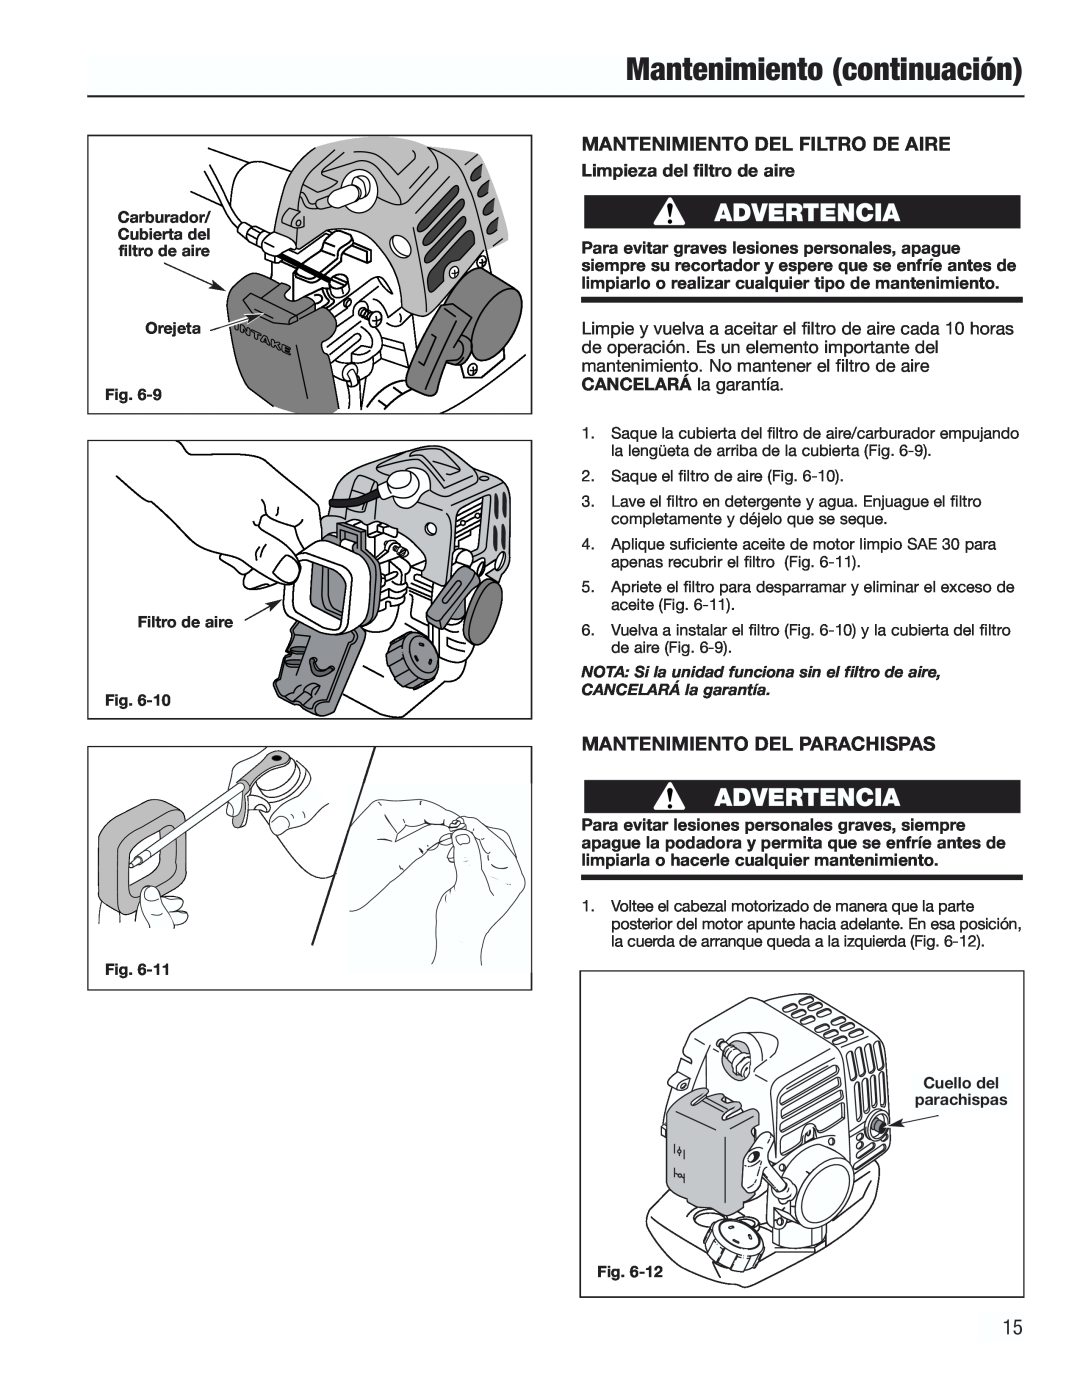 Cub Cadet CC3000 manual Mantenimiento continuación, Mantenimiento Del Filtro De Aire, Mantenimiento Del Parachispas 